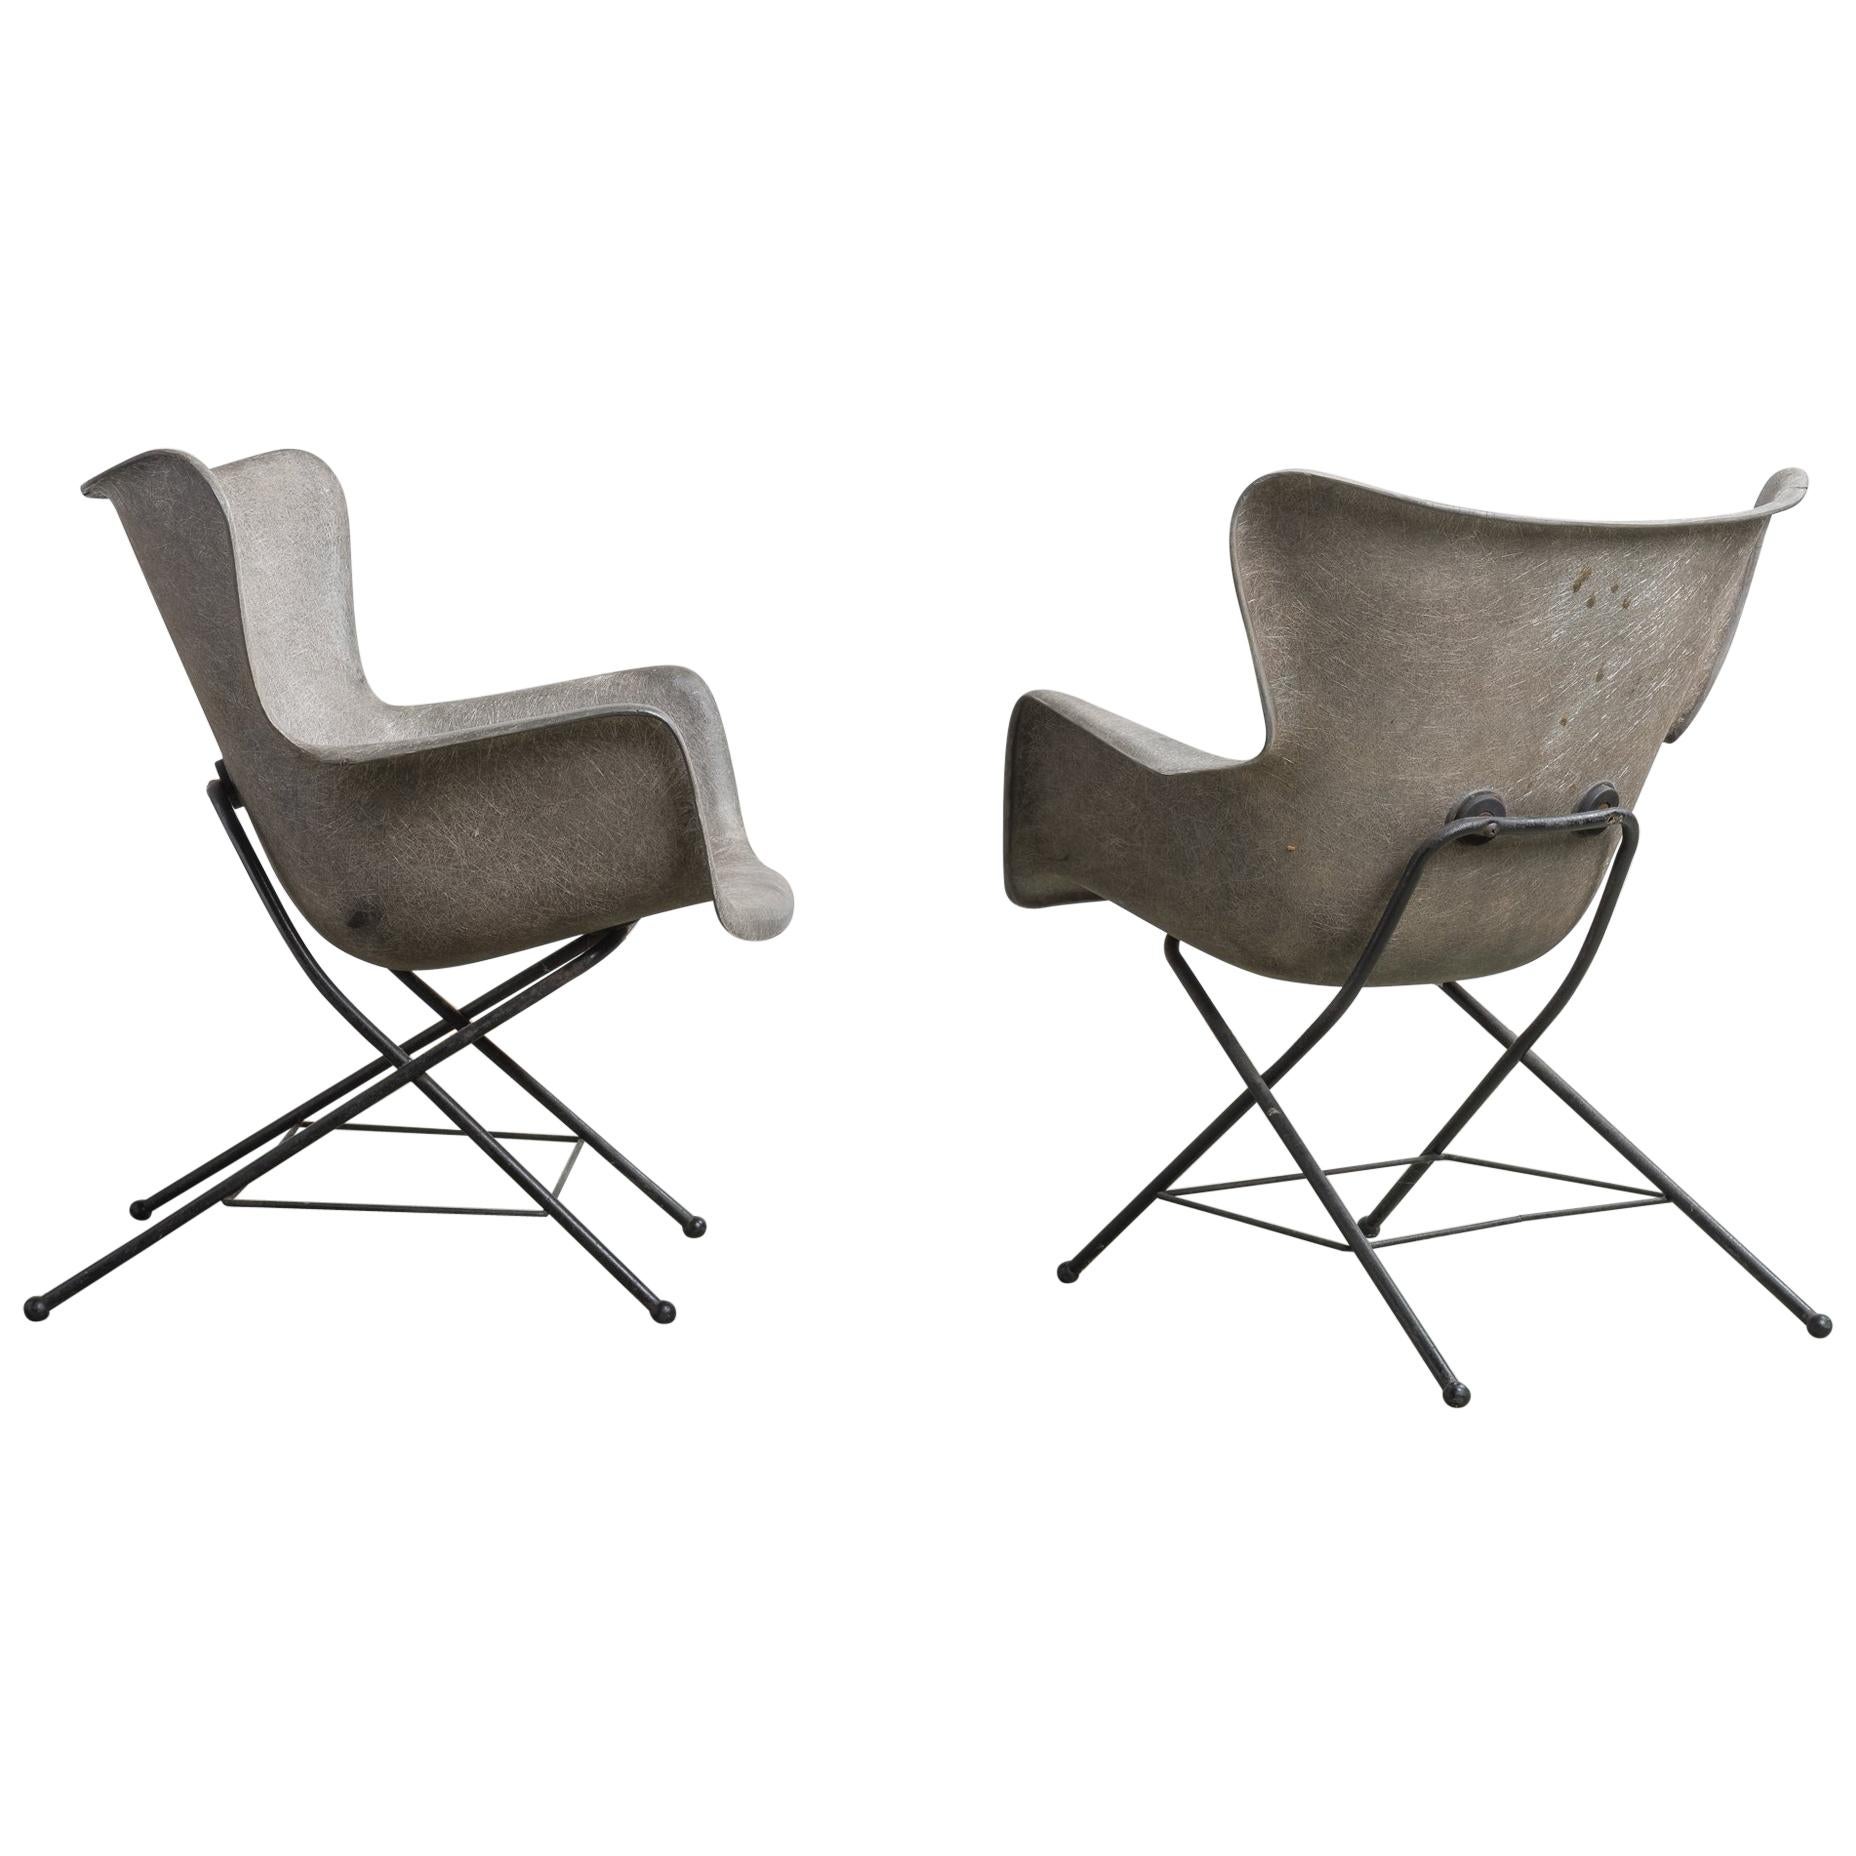 Pair of Modern Fiberglass Chairs, America, 20th Century